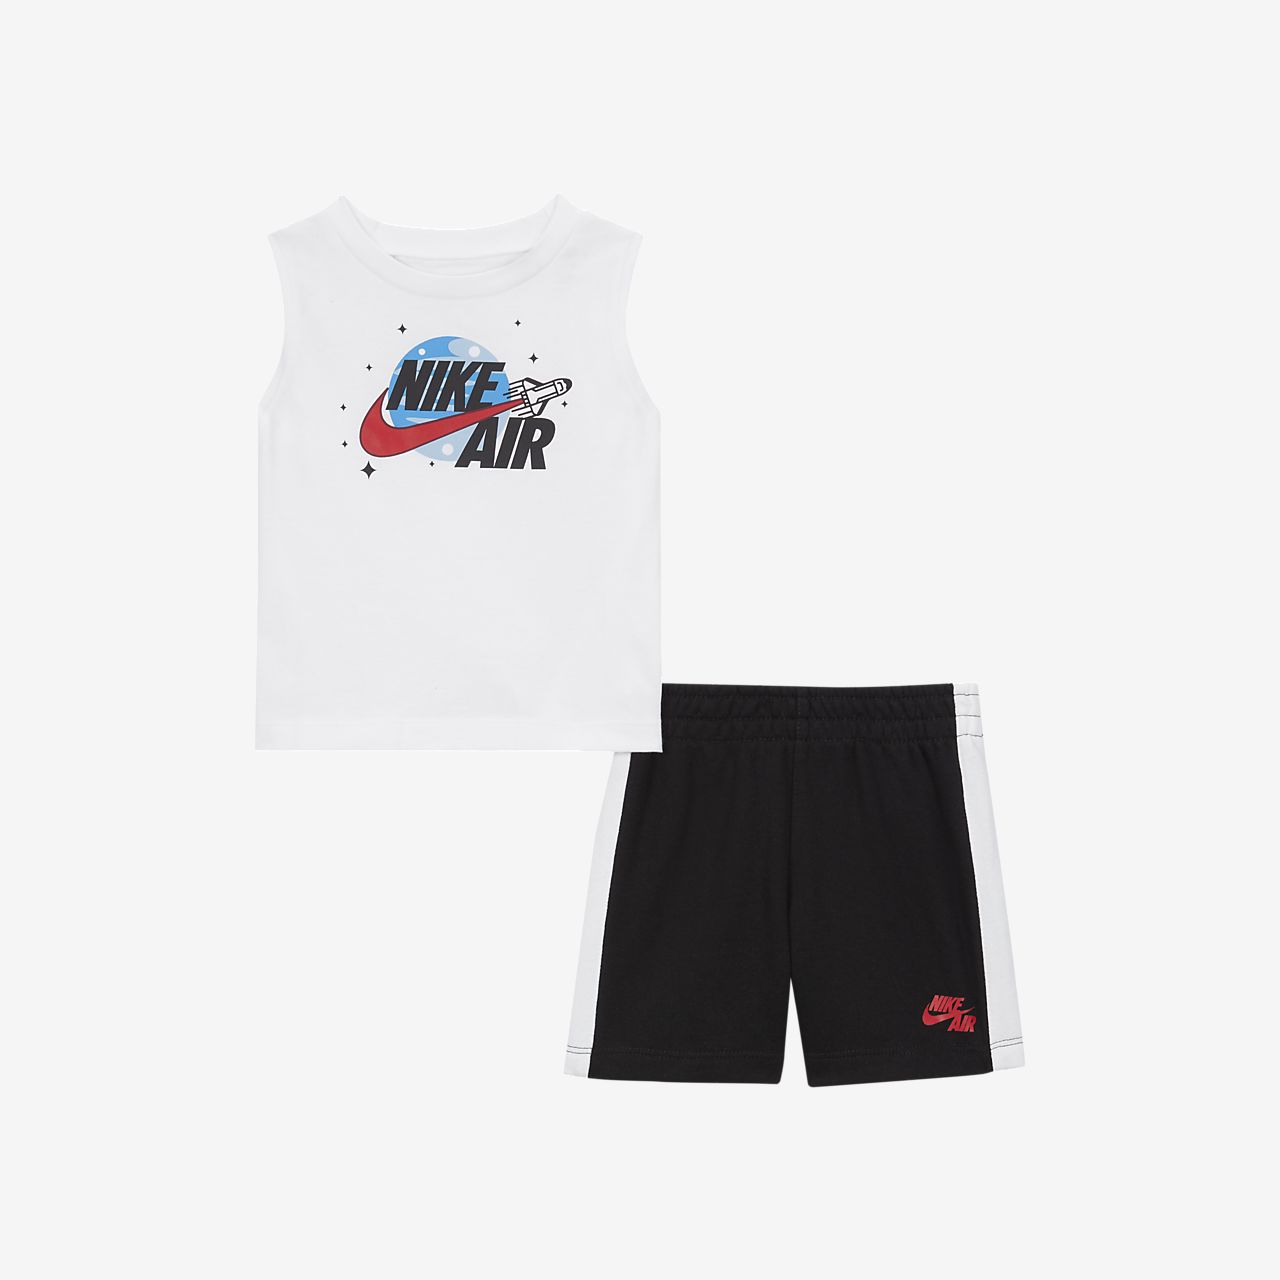 Nike Air Baby (12-24M) Top and Shorts 